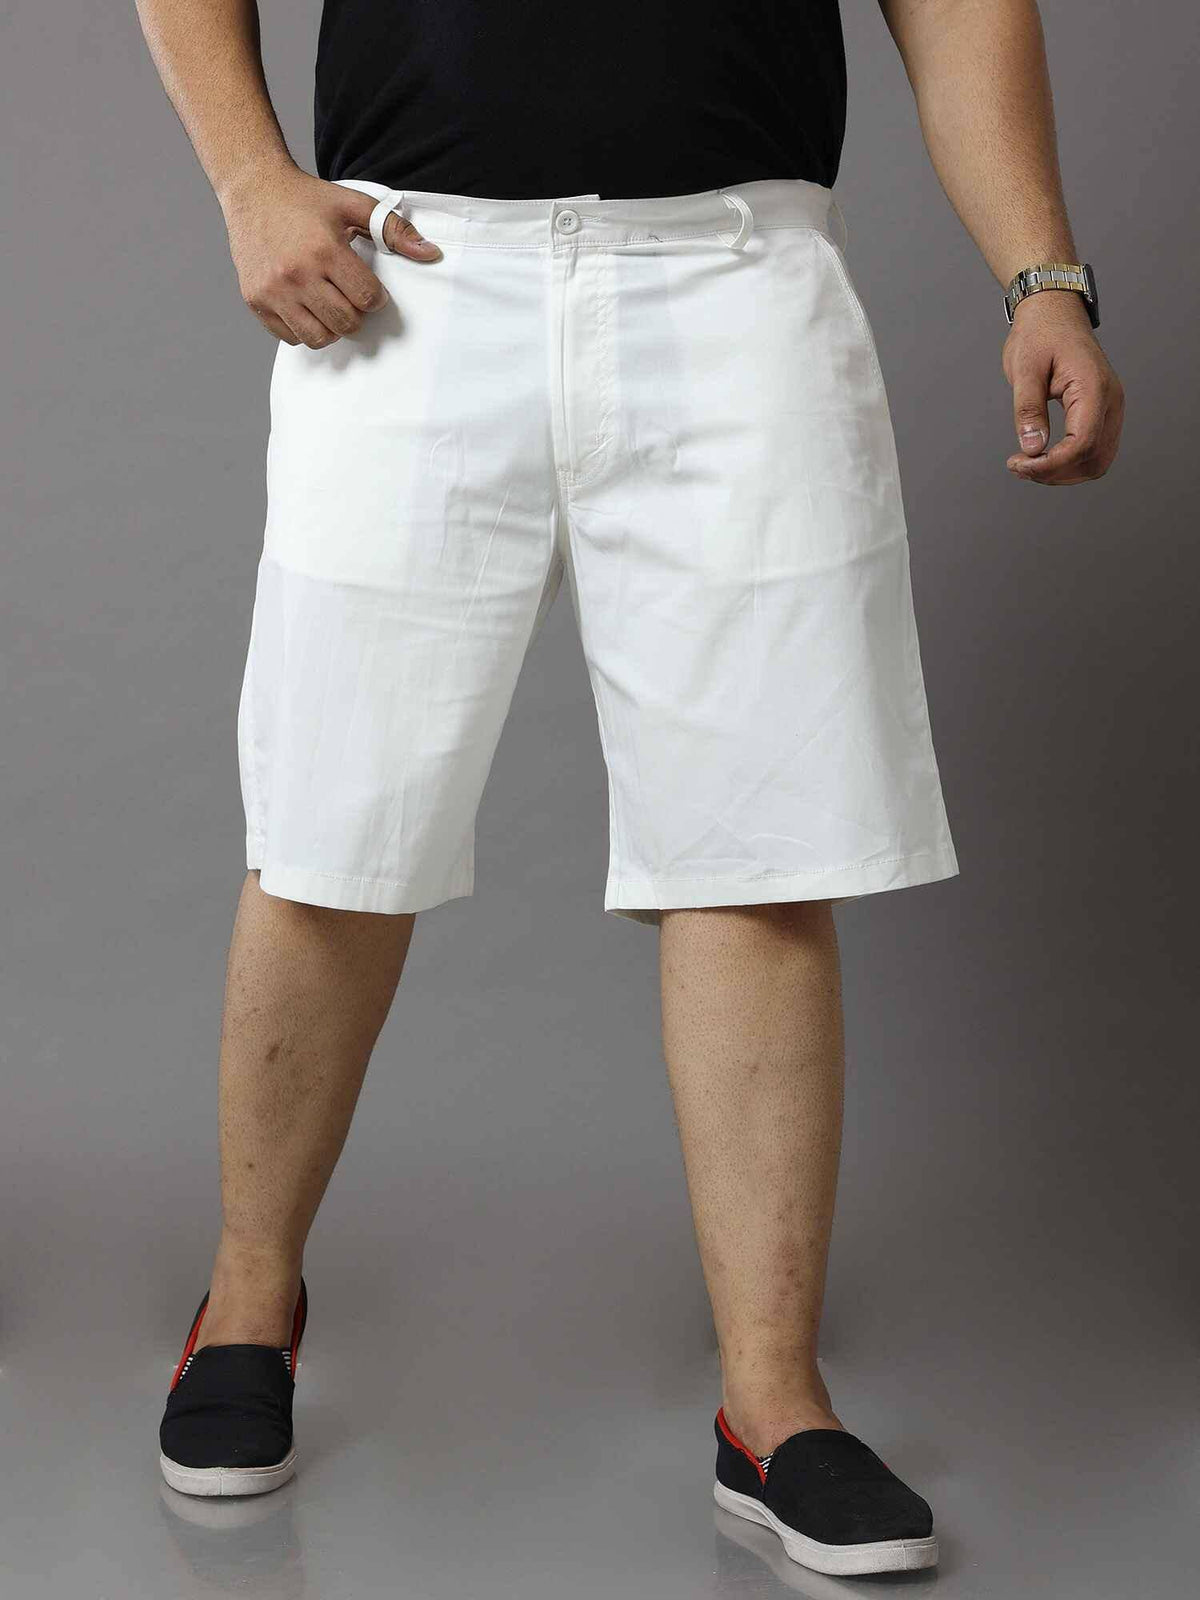 White Shorts Men's Plus Size - Guniaa Fashions